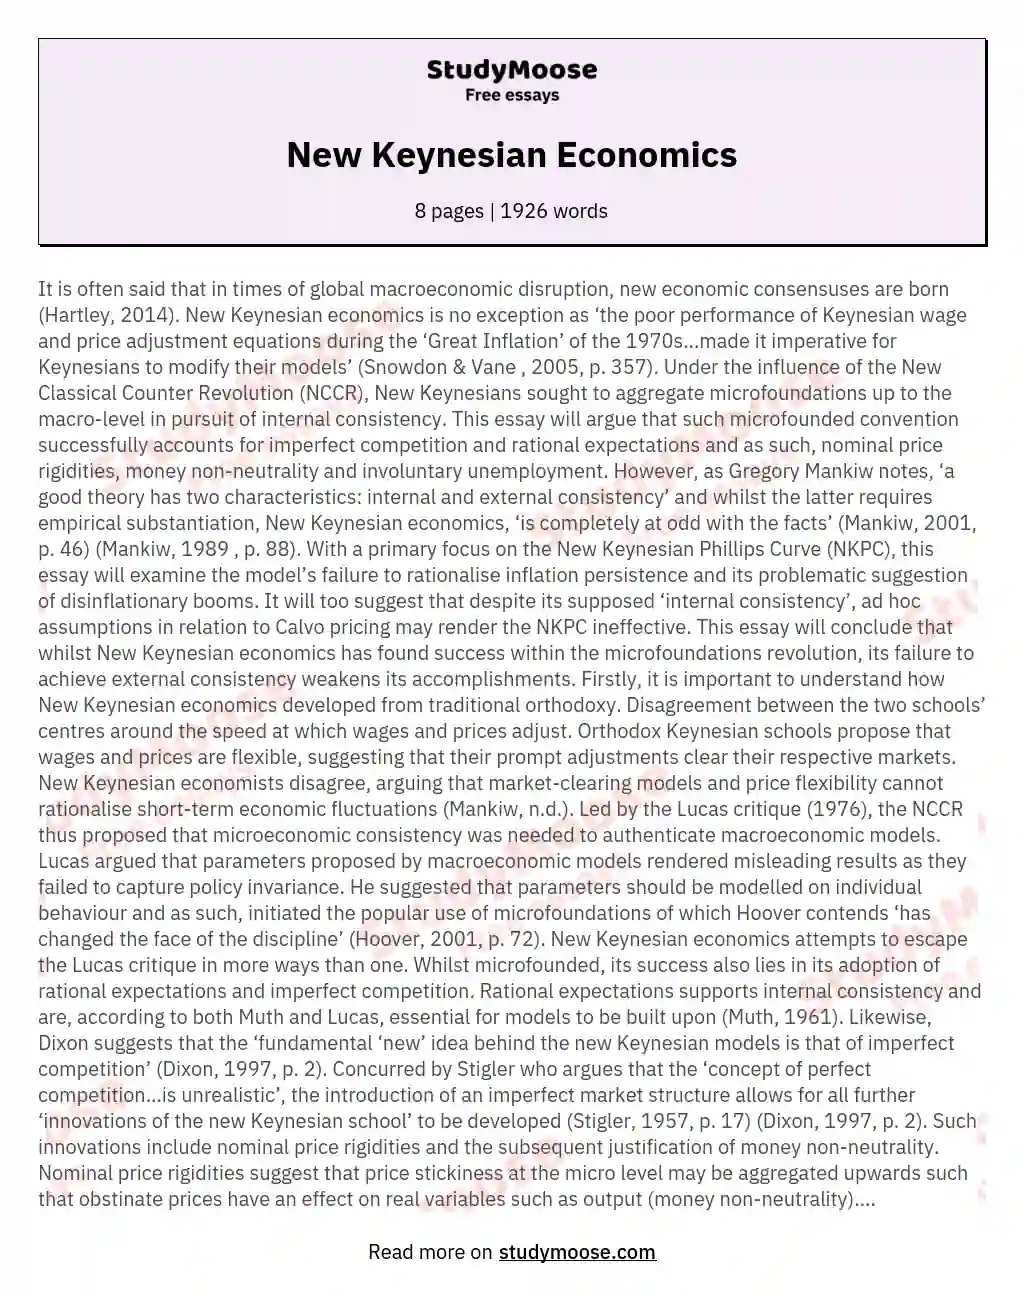 New Keynesian Economics essay